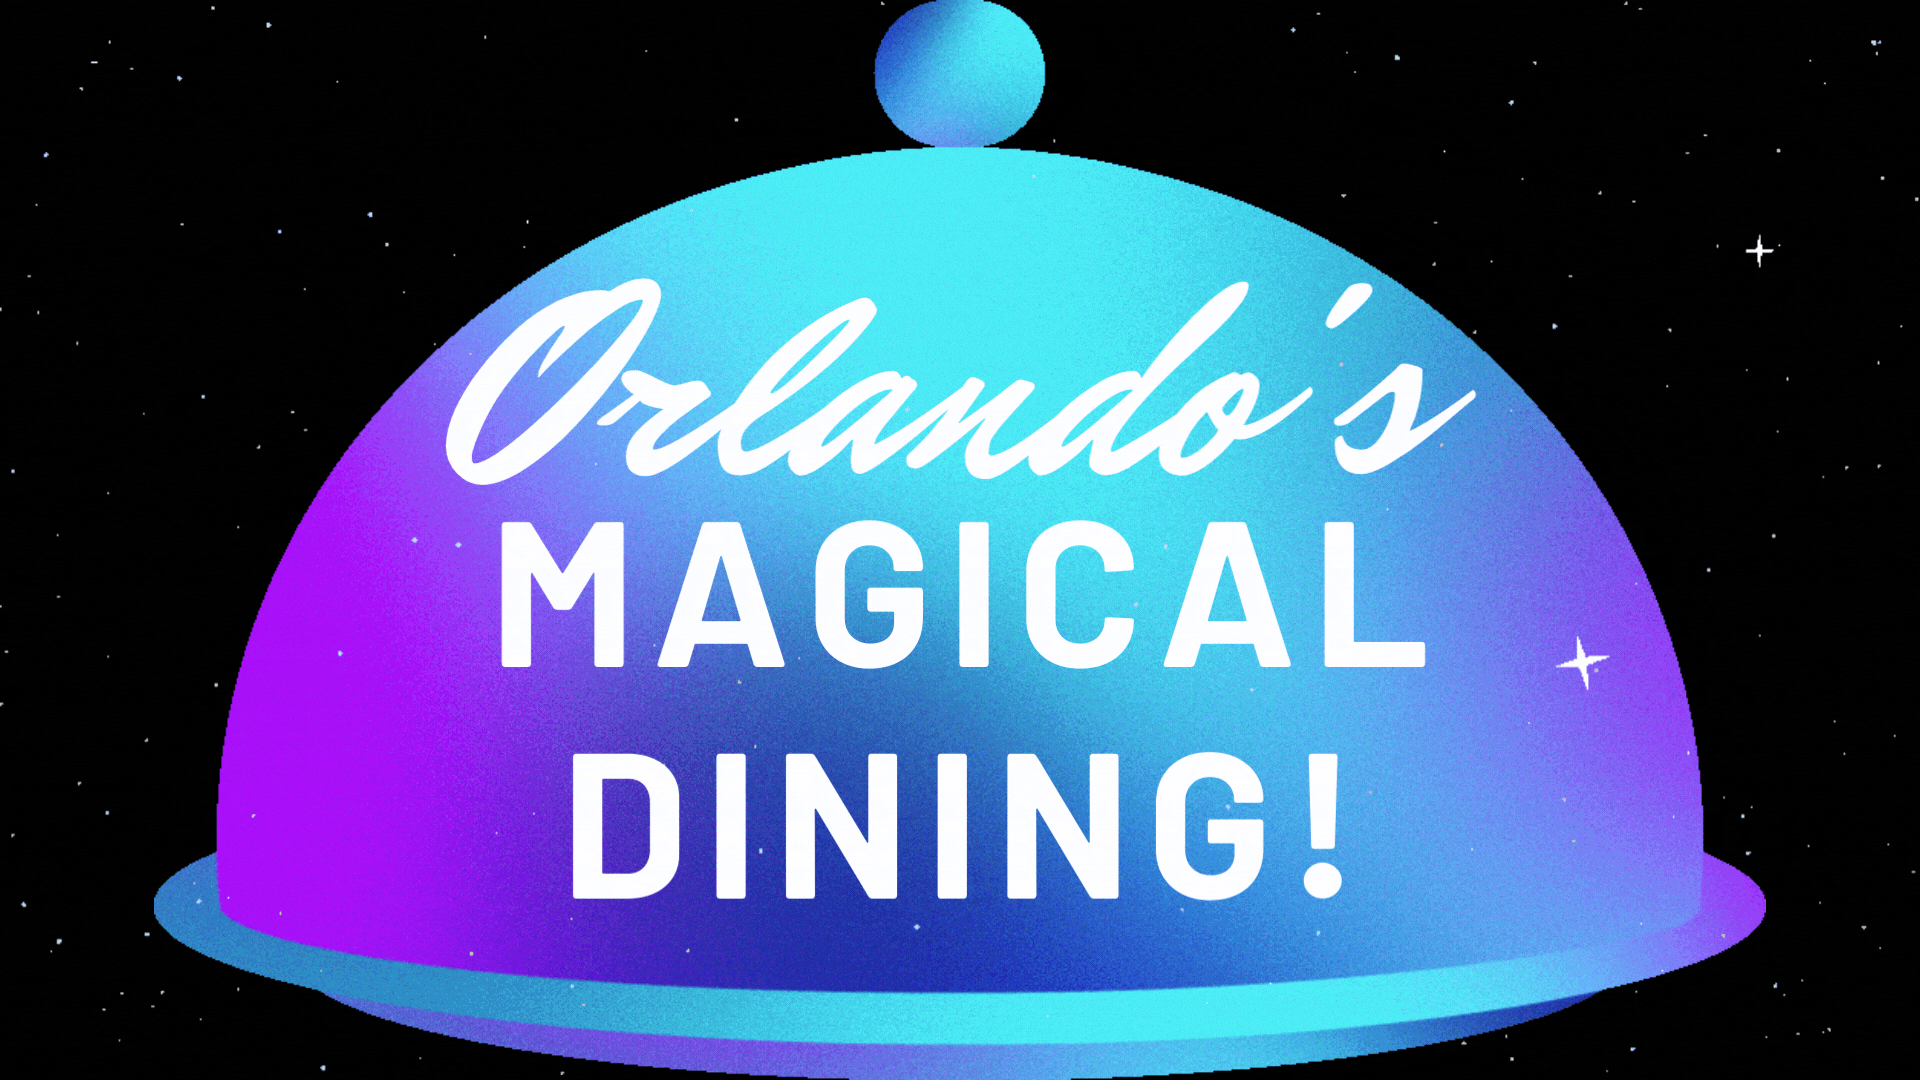 Orlando’s Magical Dining! ✨